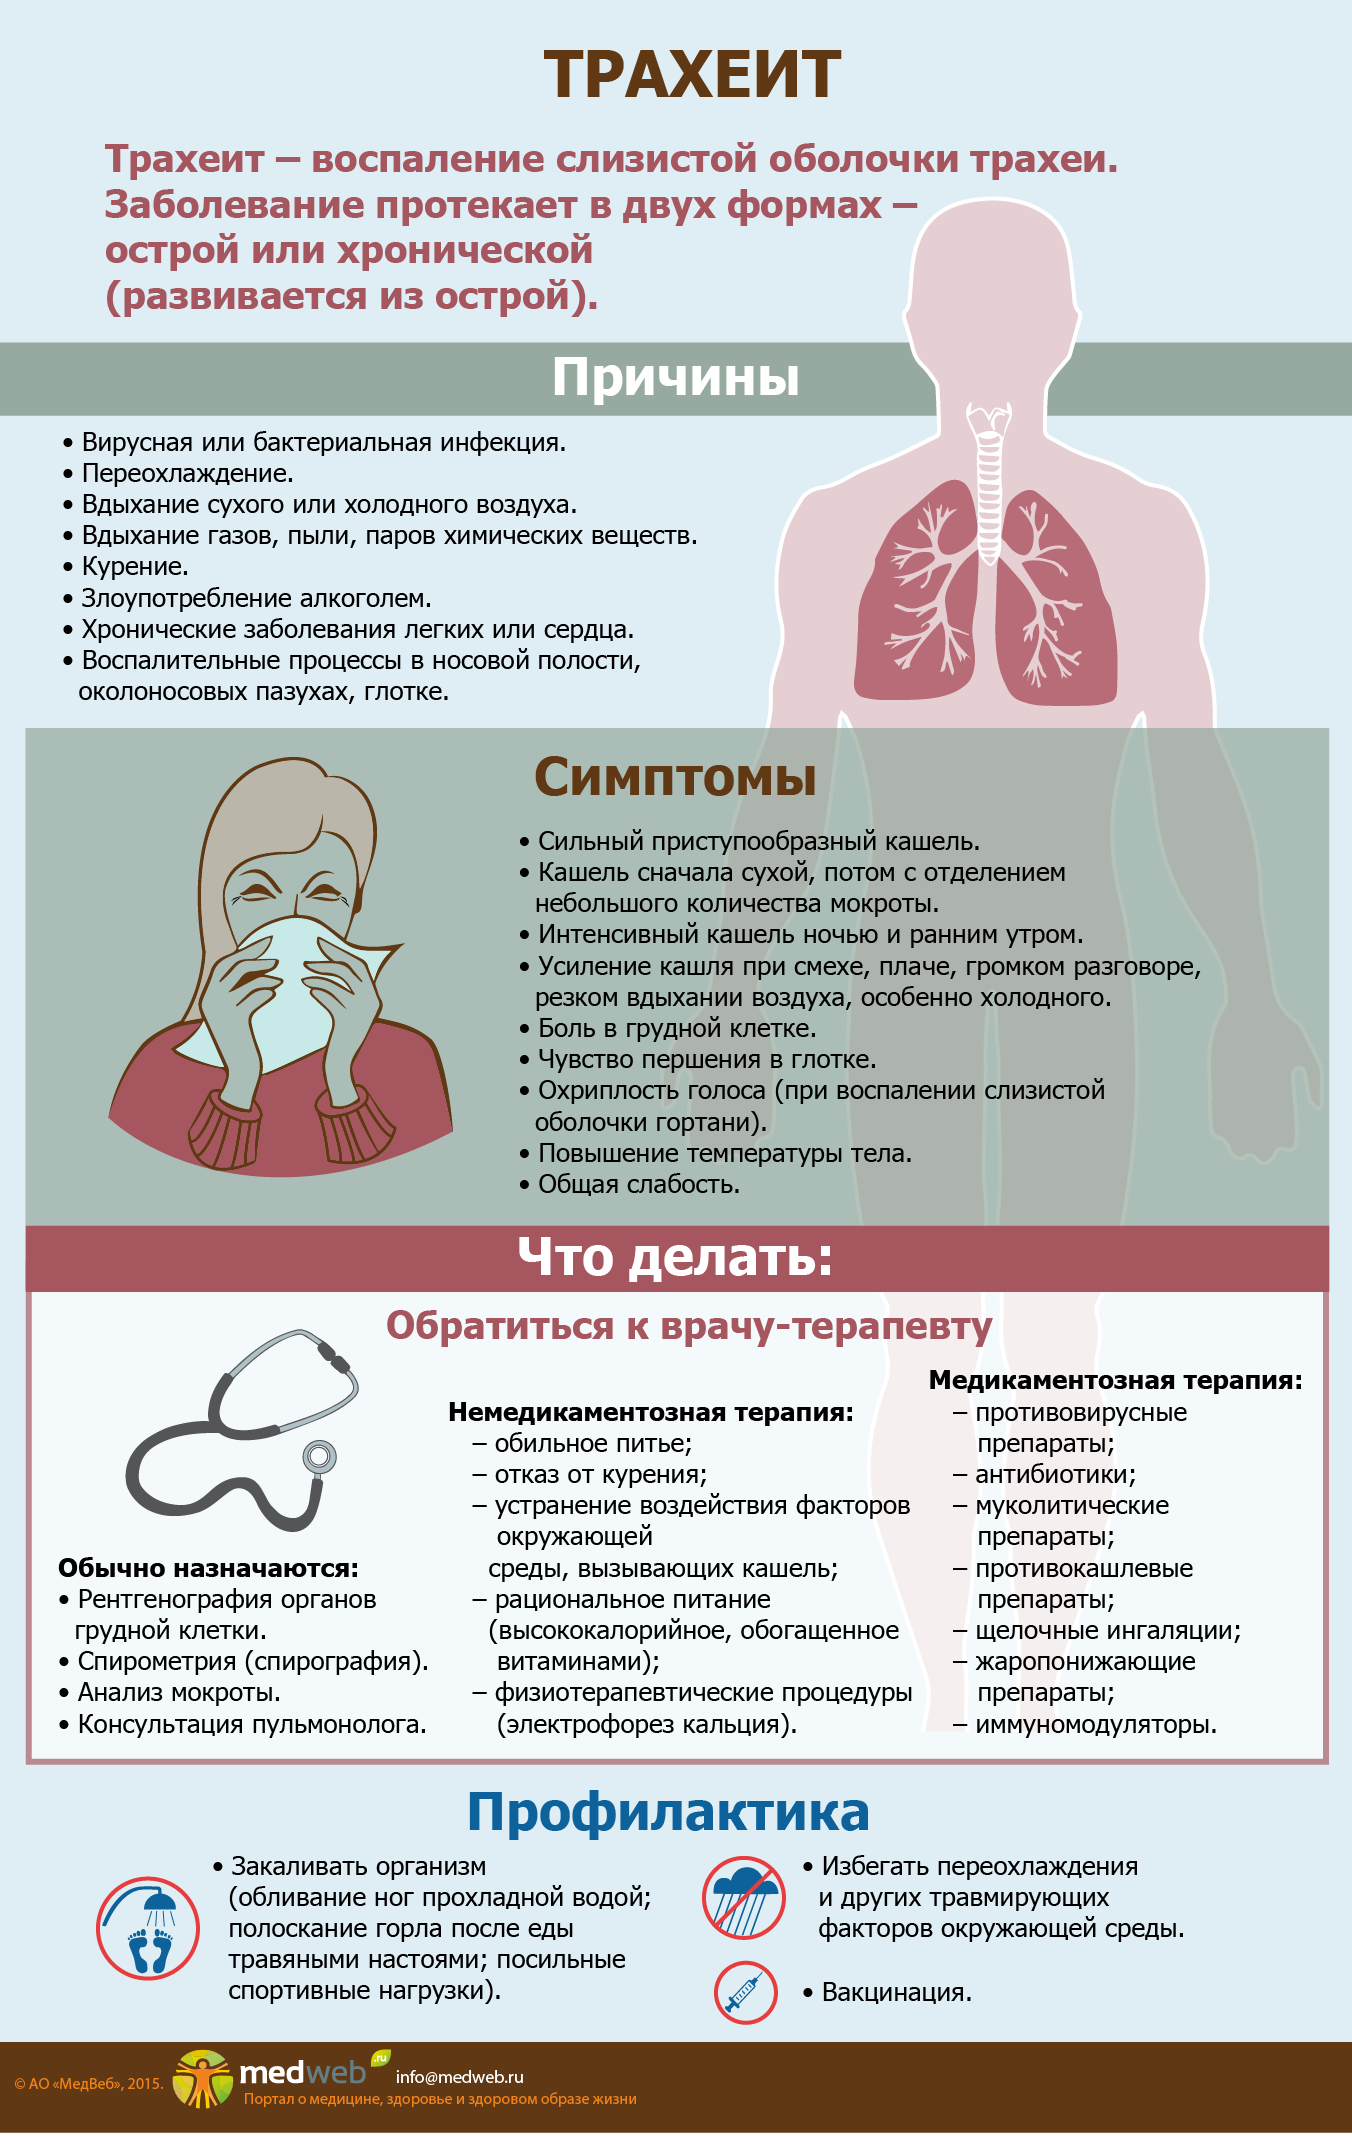 Симптомы коронавируса: кашель, температура, одышка